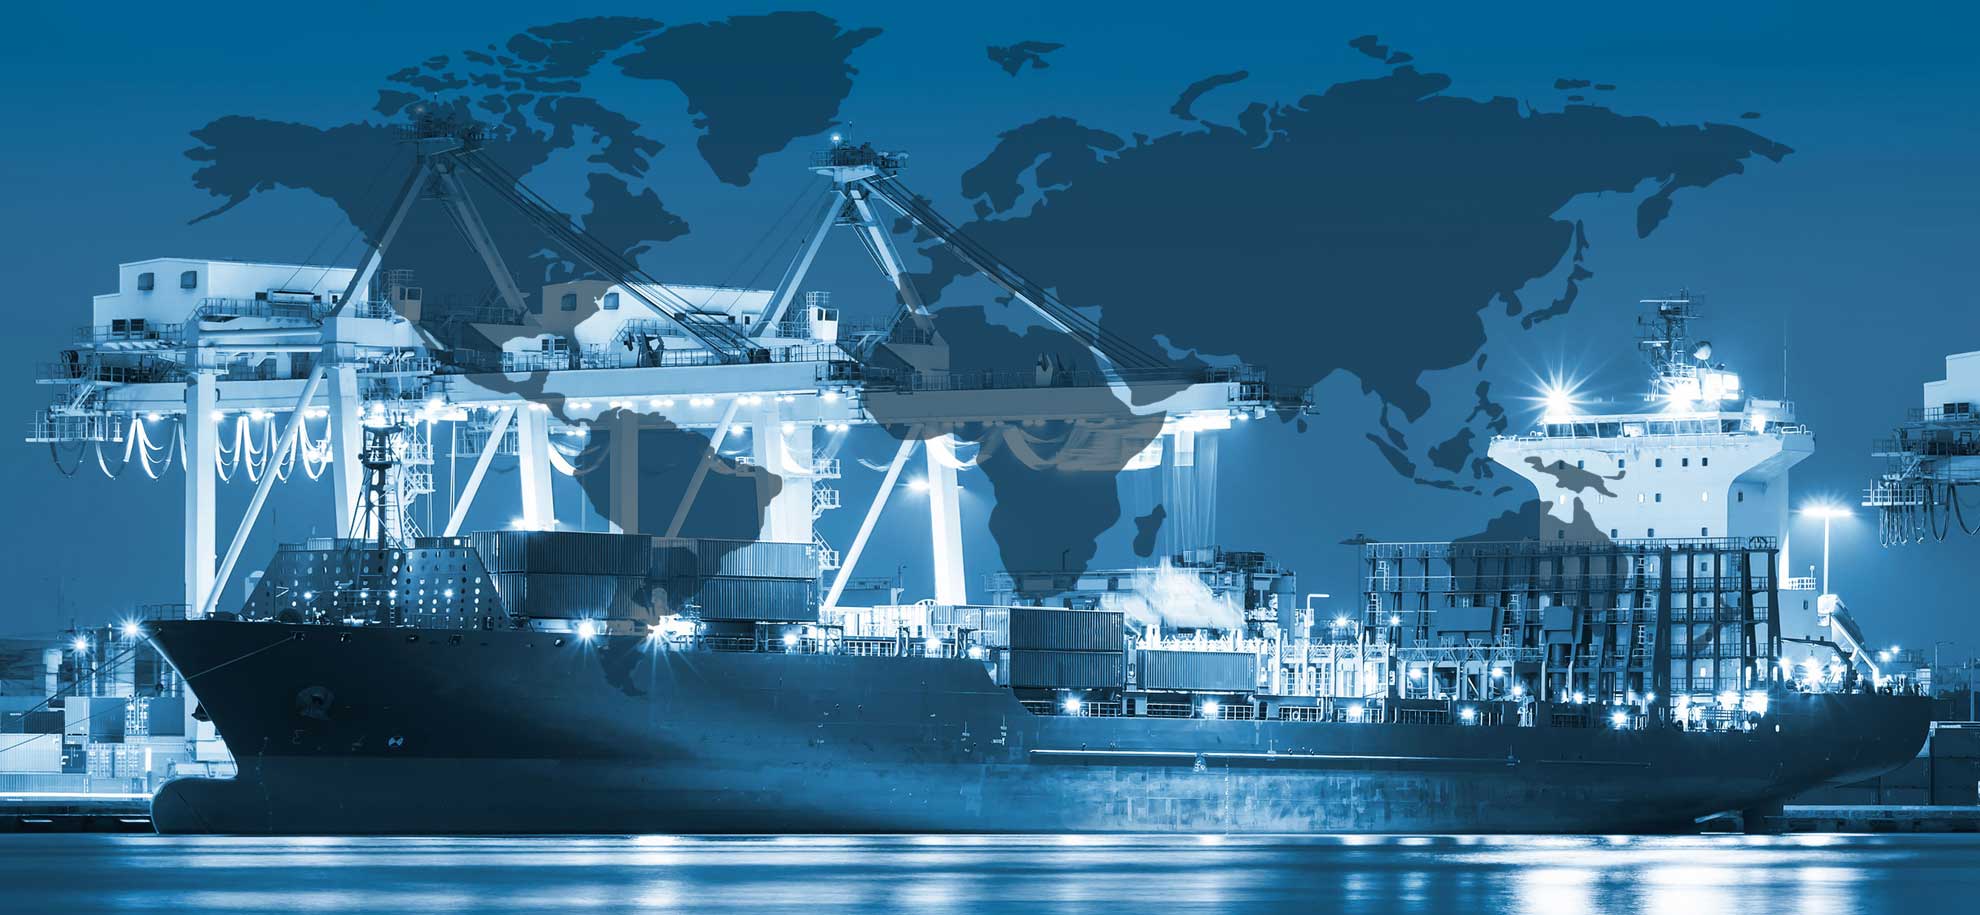 International Shipping Network